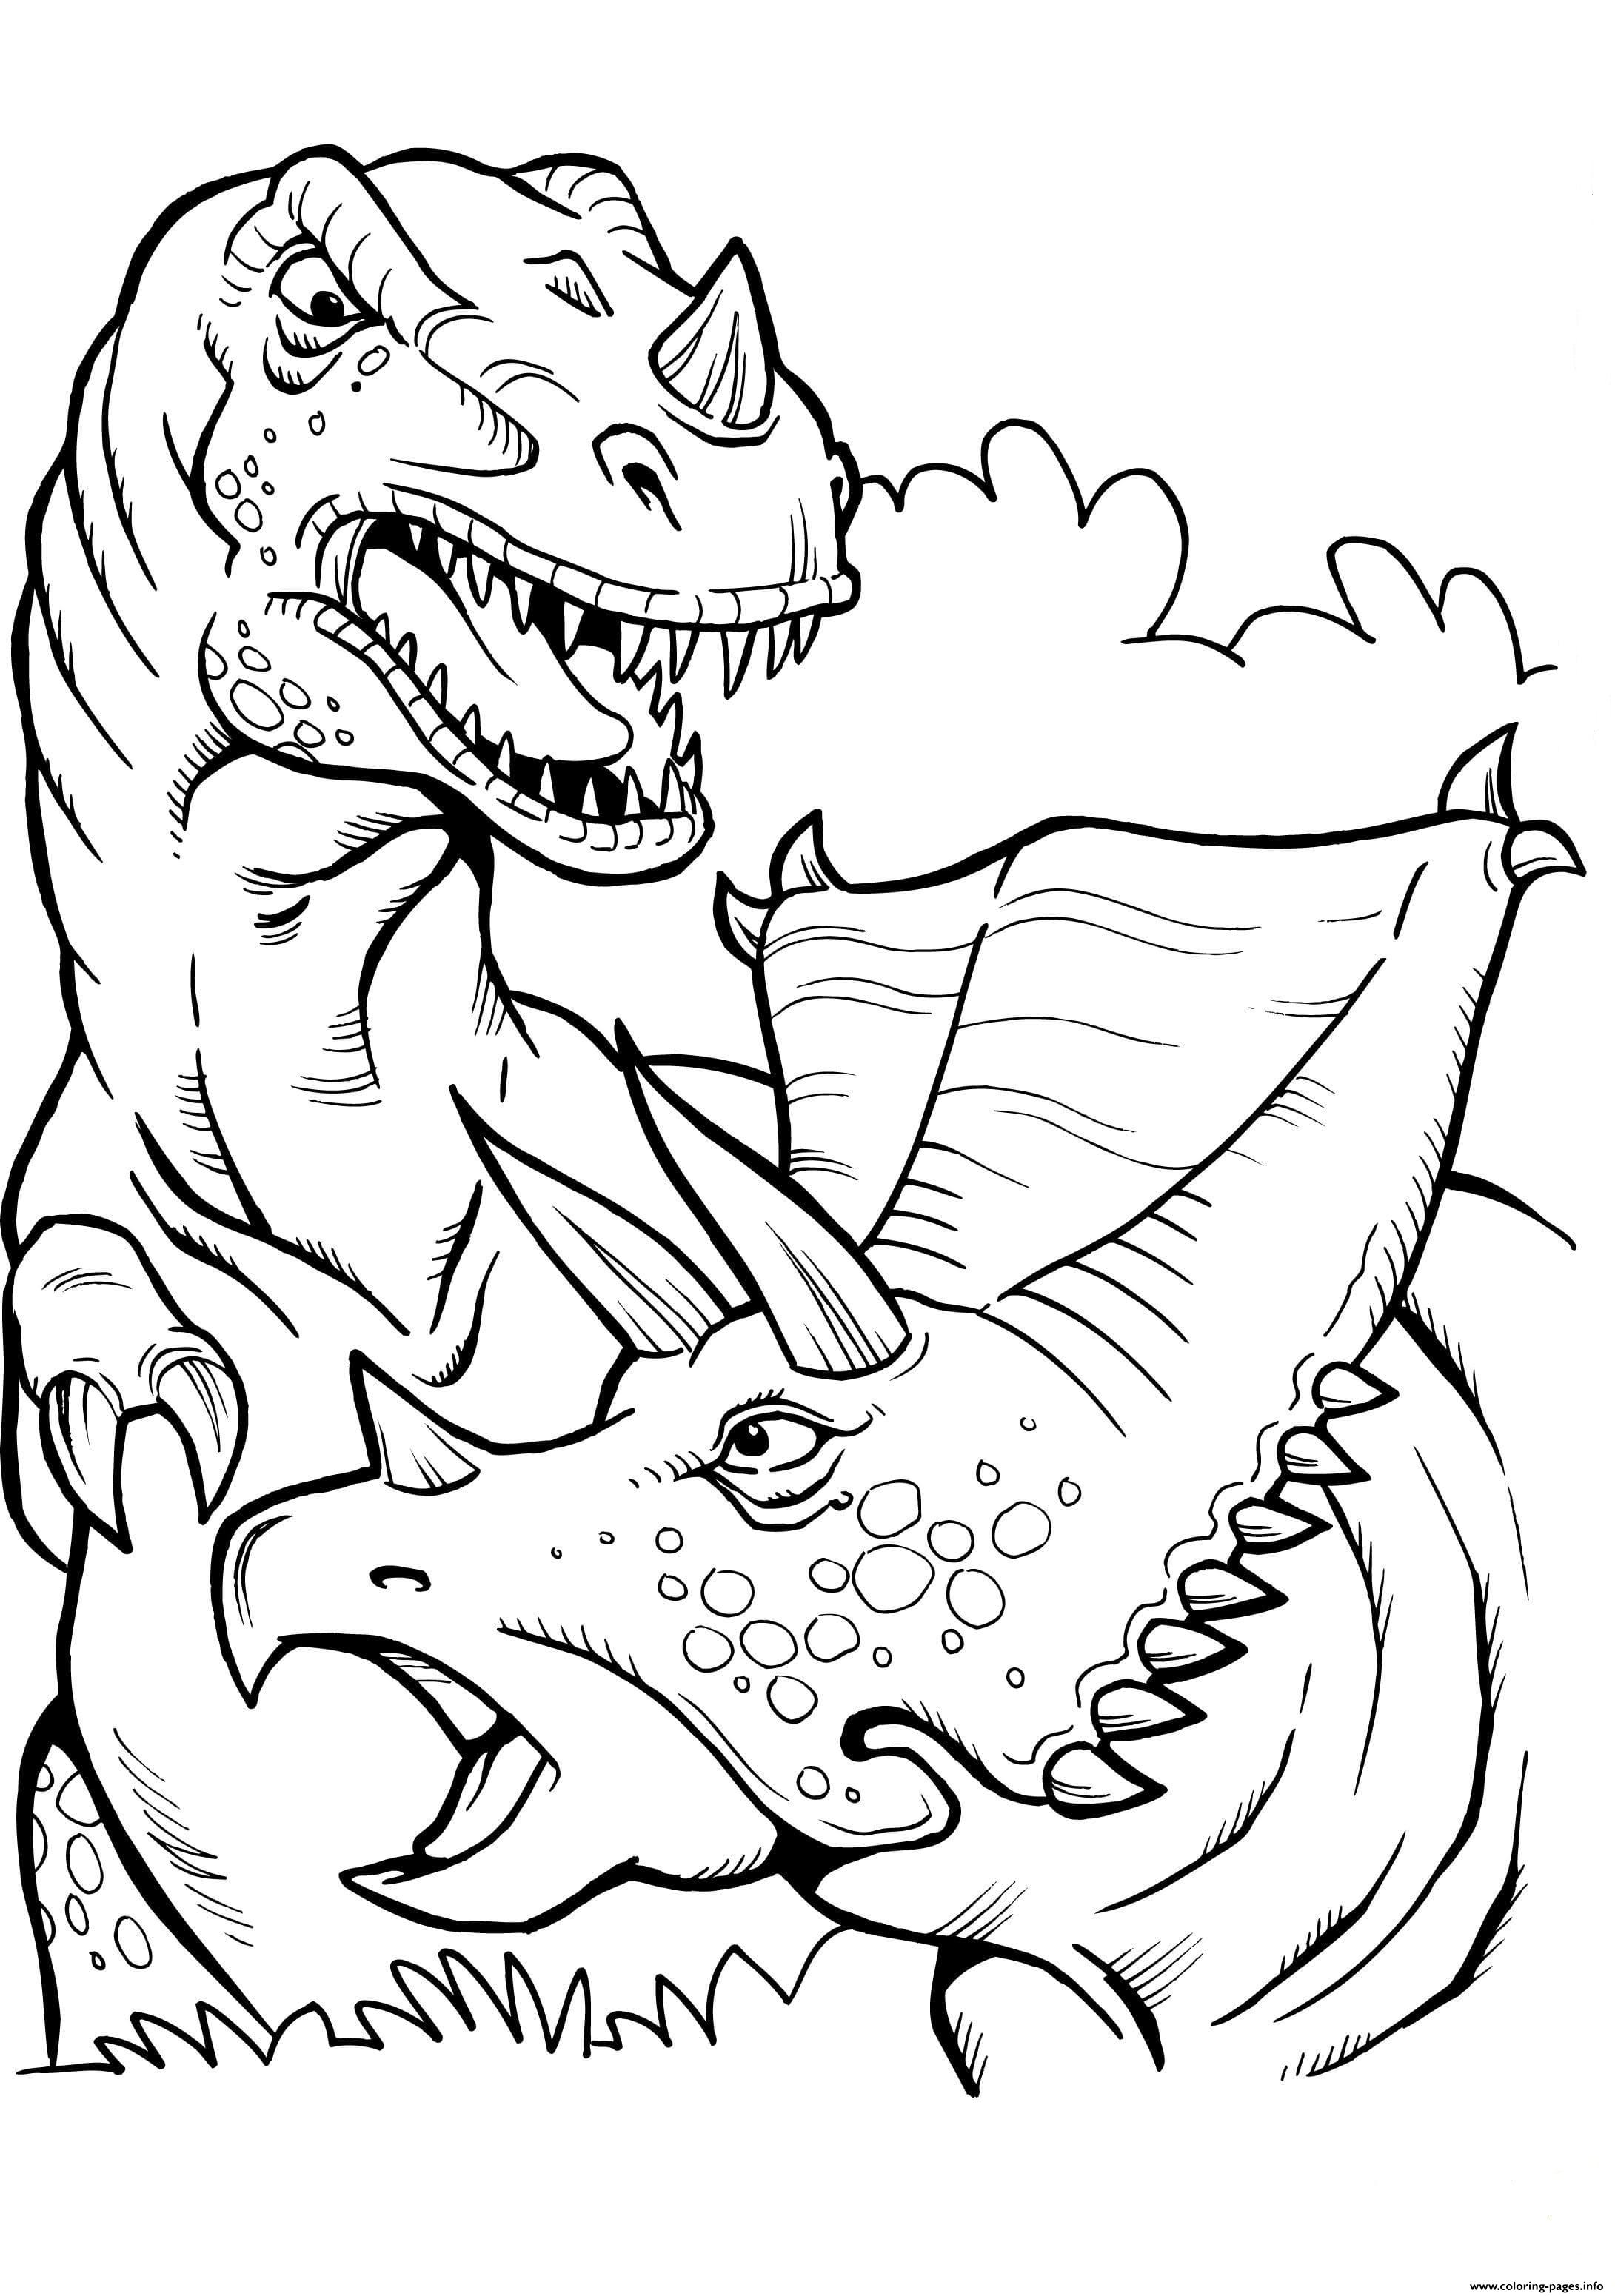 Dinosaur Battle coloring